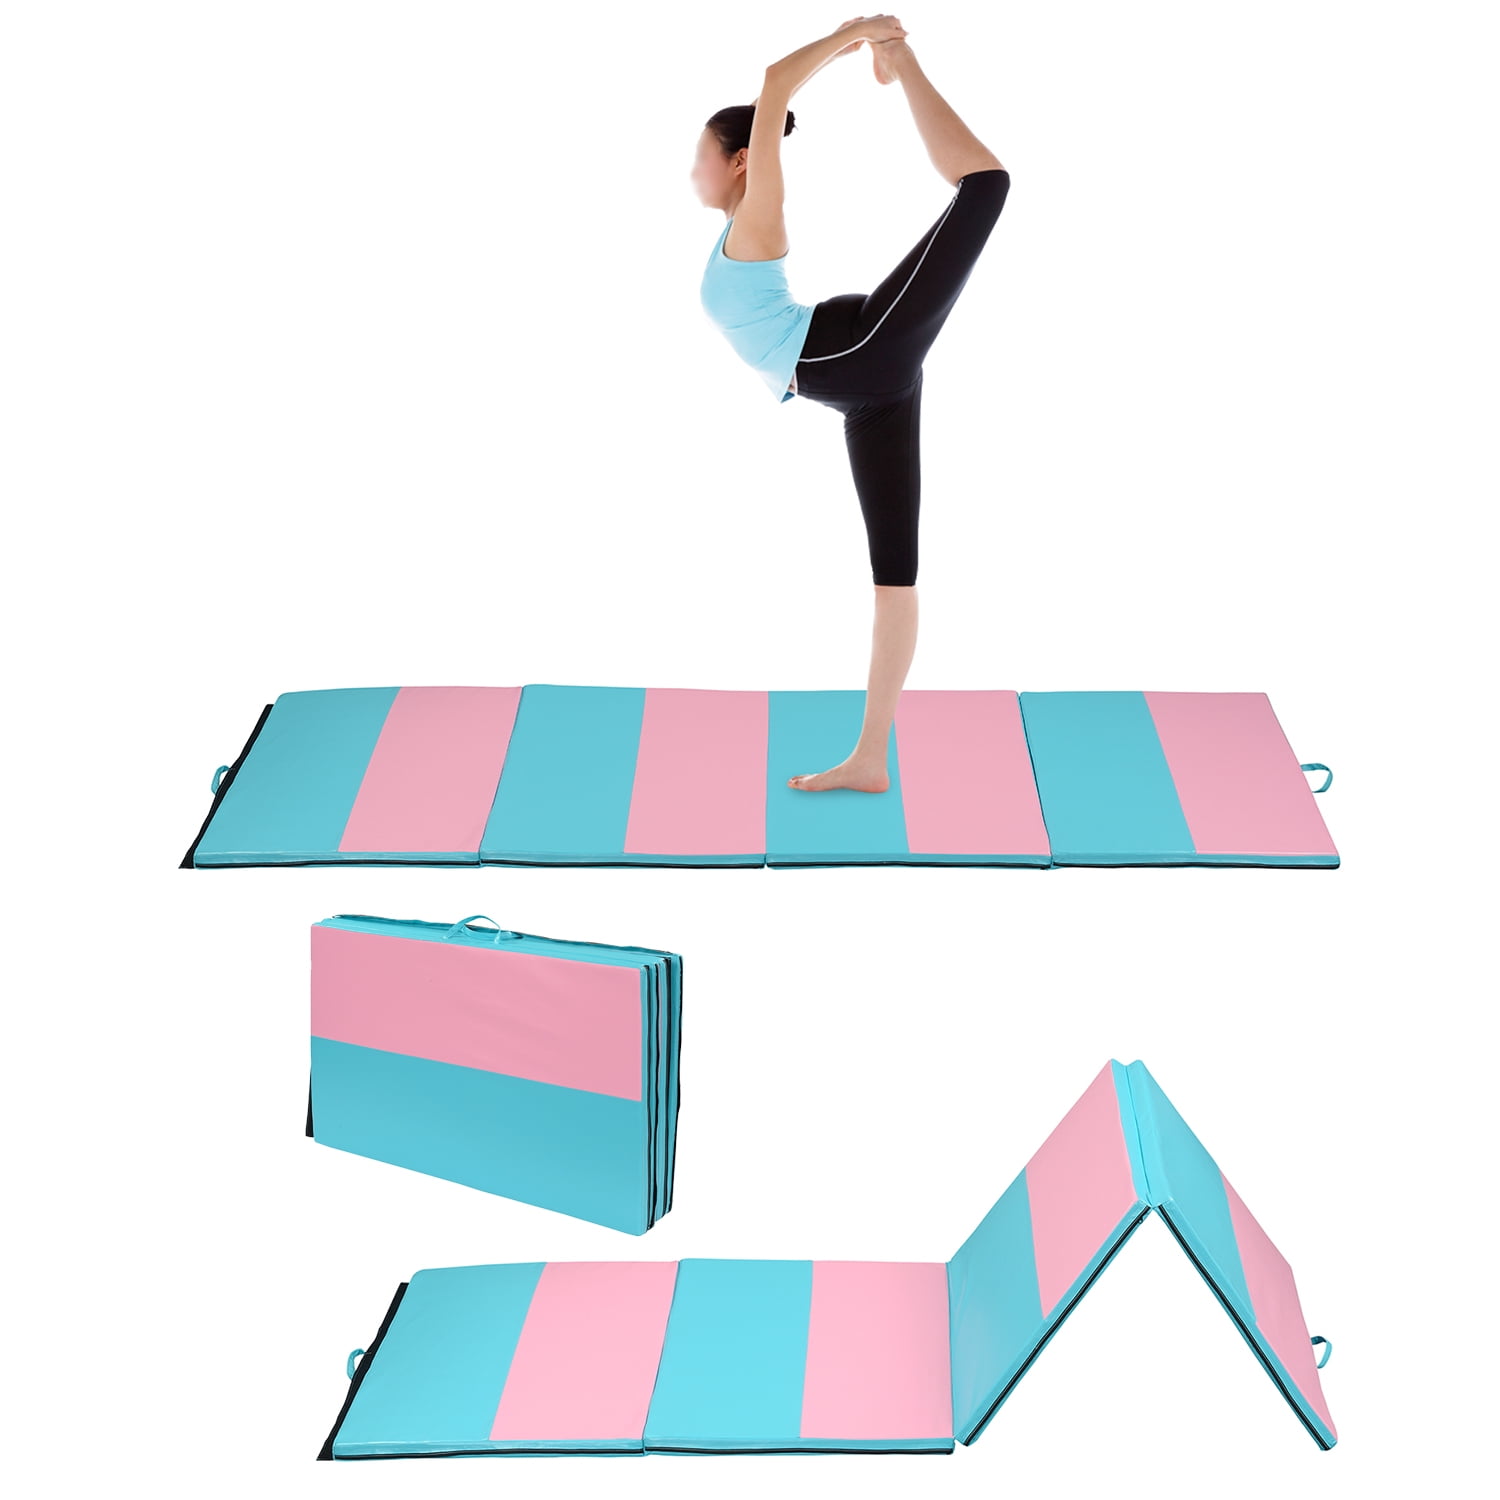 4'x10'x2" Gymnastic mat sports yoga fitness exercise tumbling game cushion home